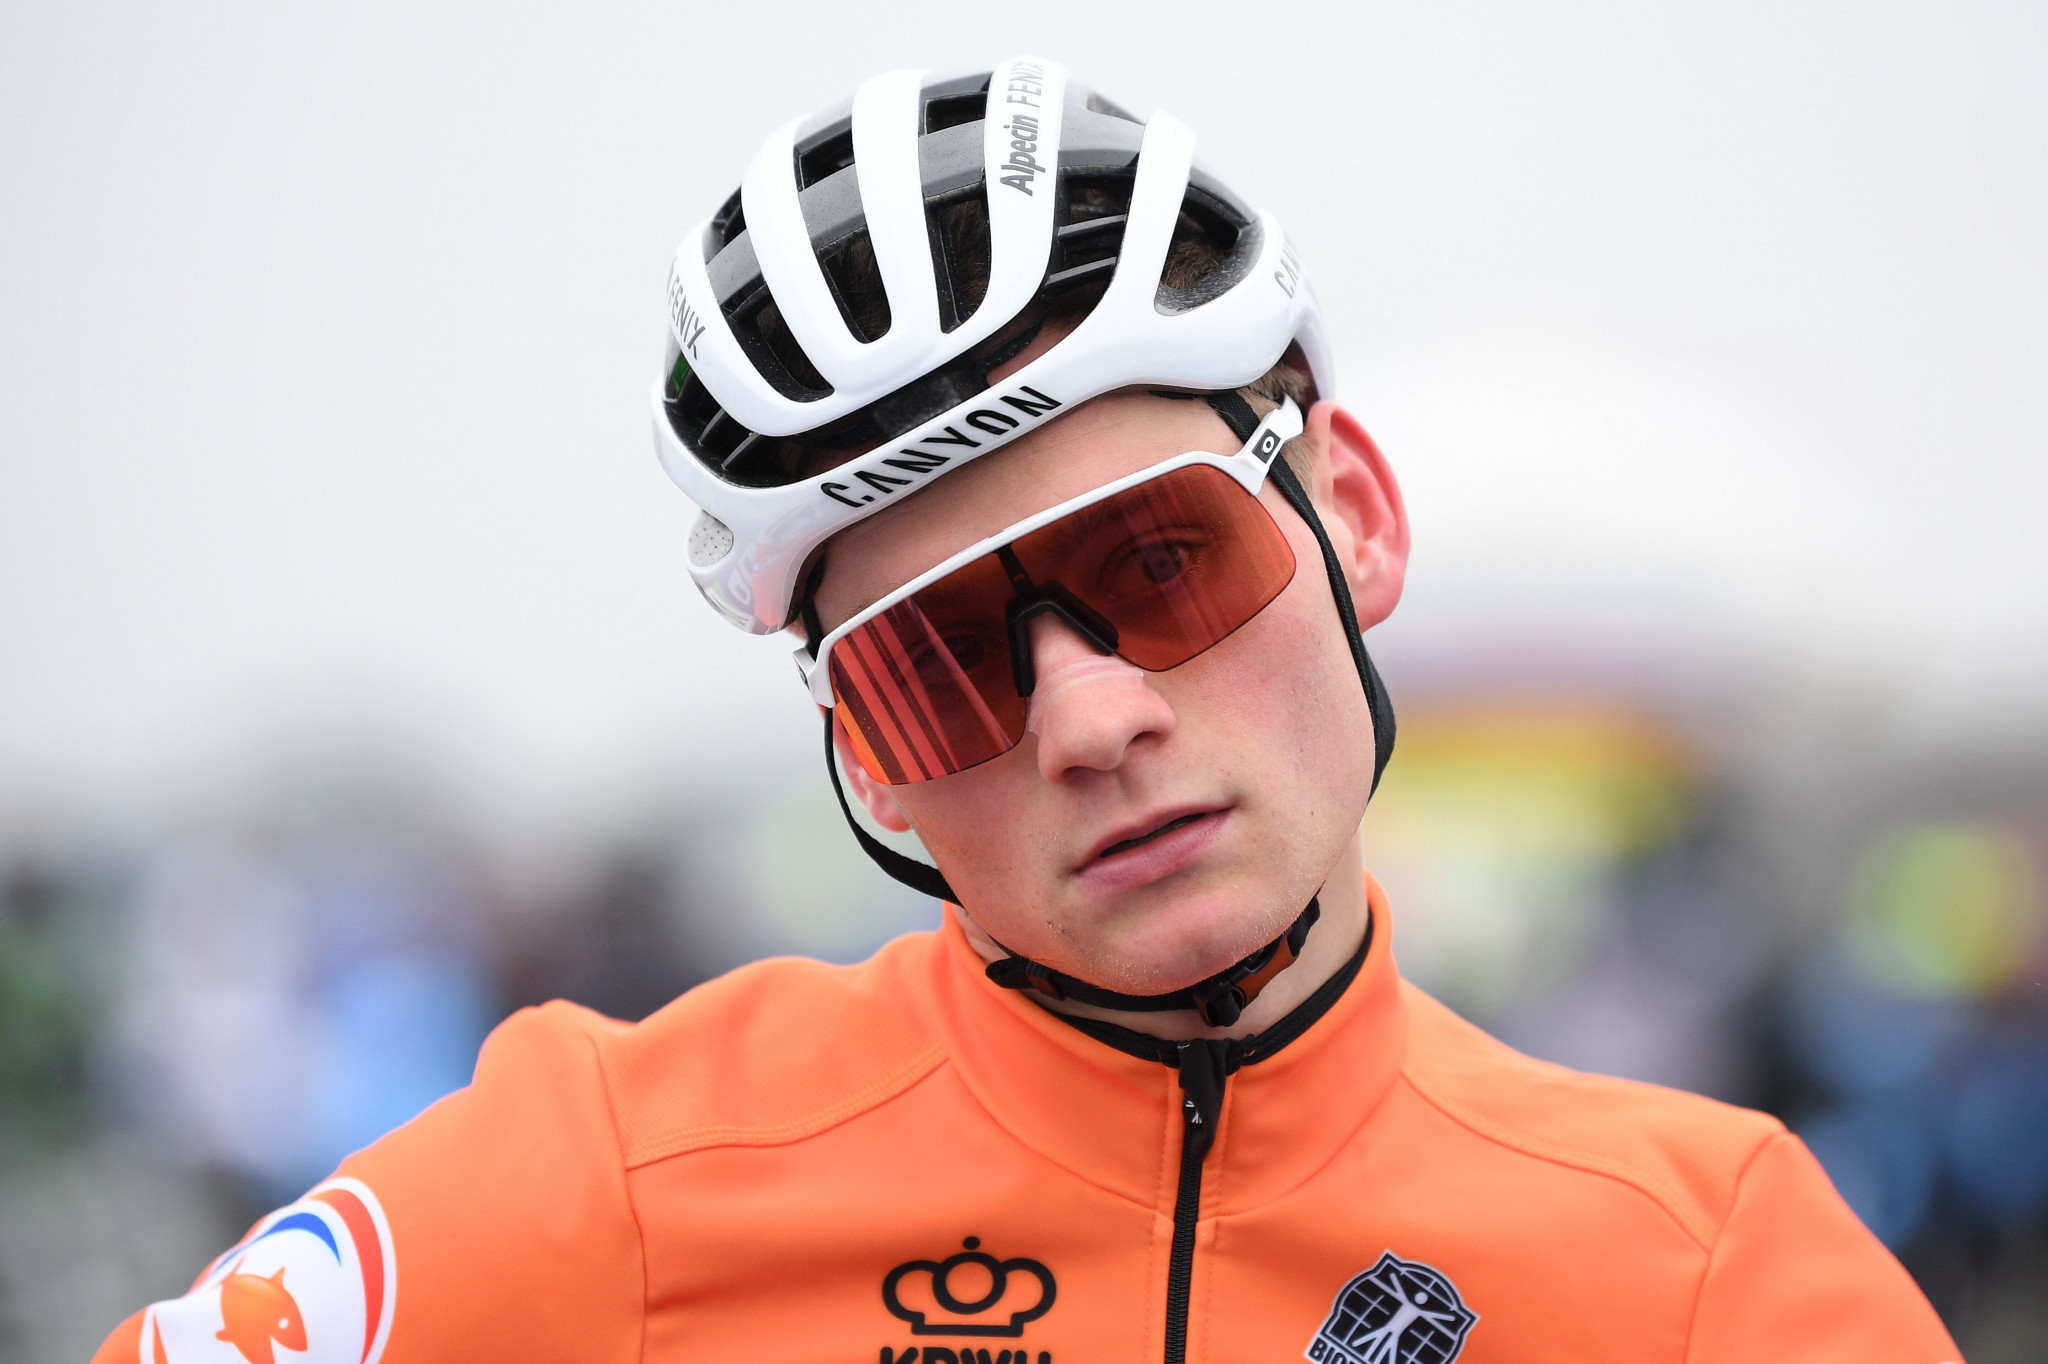 Van der Poel could leave Tour de France early to focus on Tokyo 2020